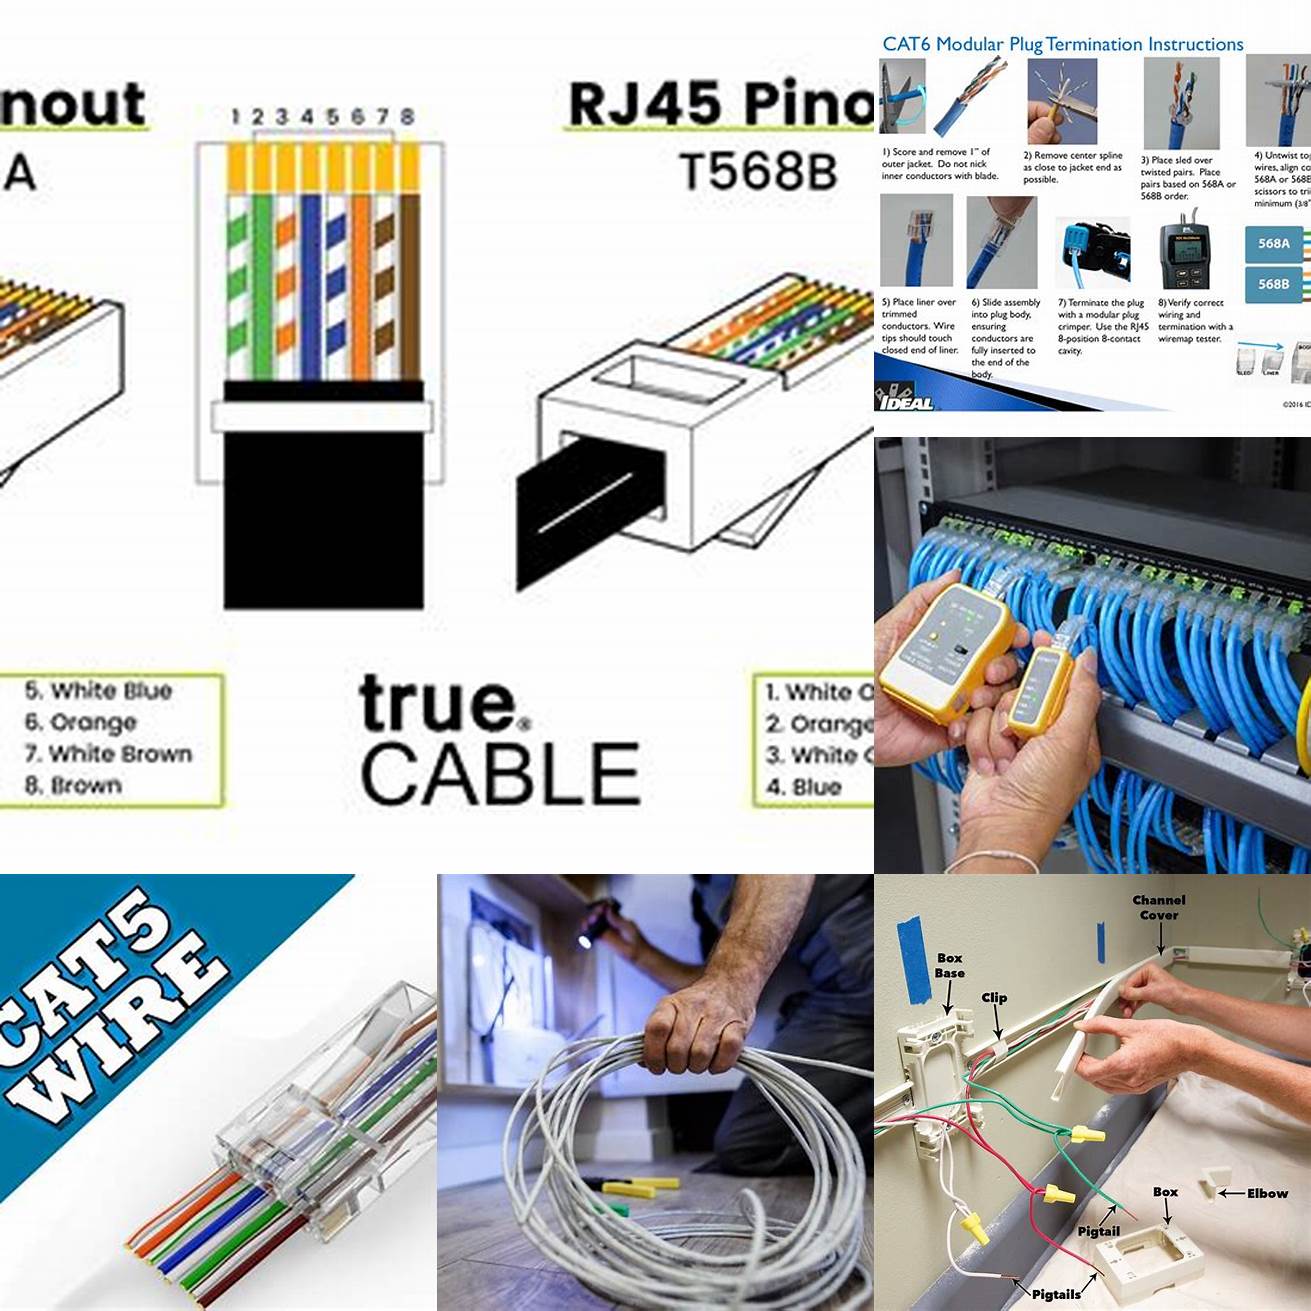 Ensure proper cable installation